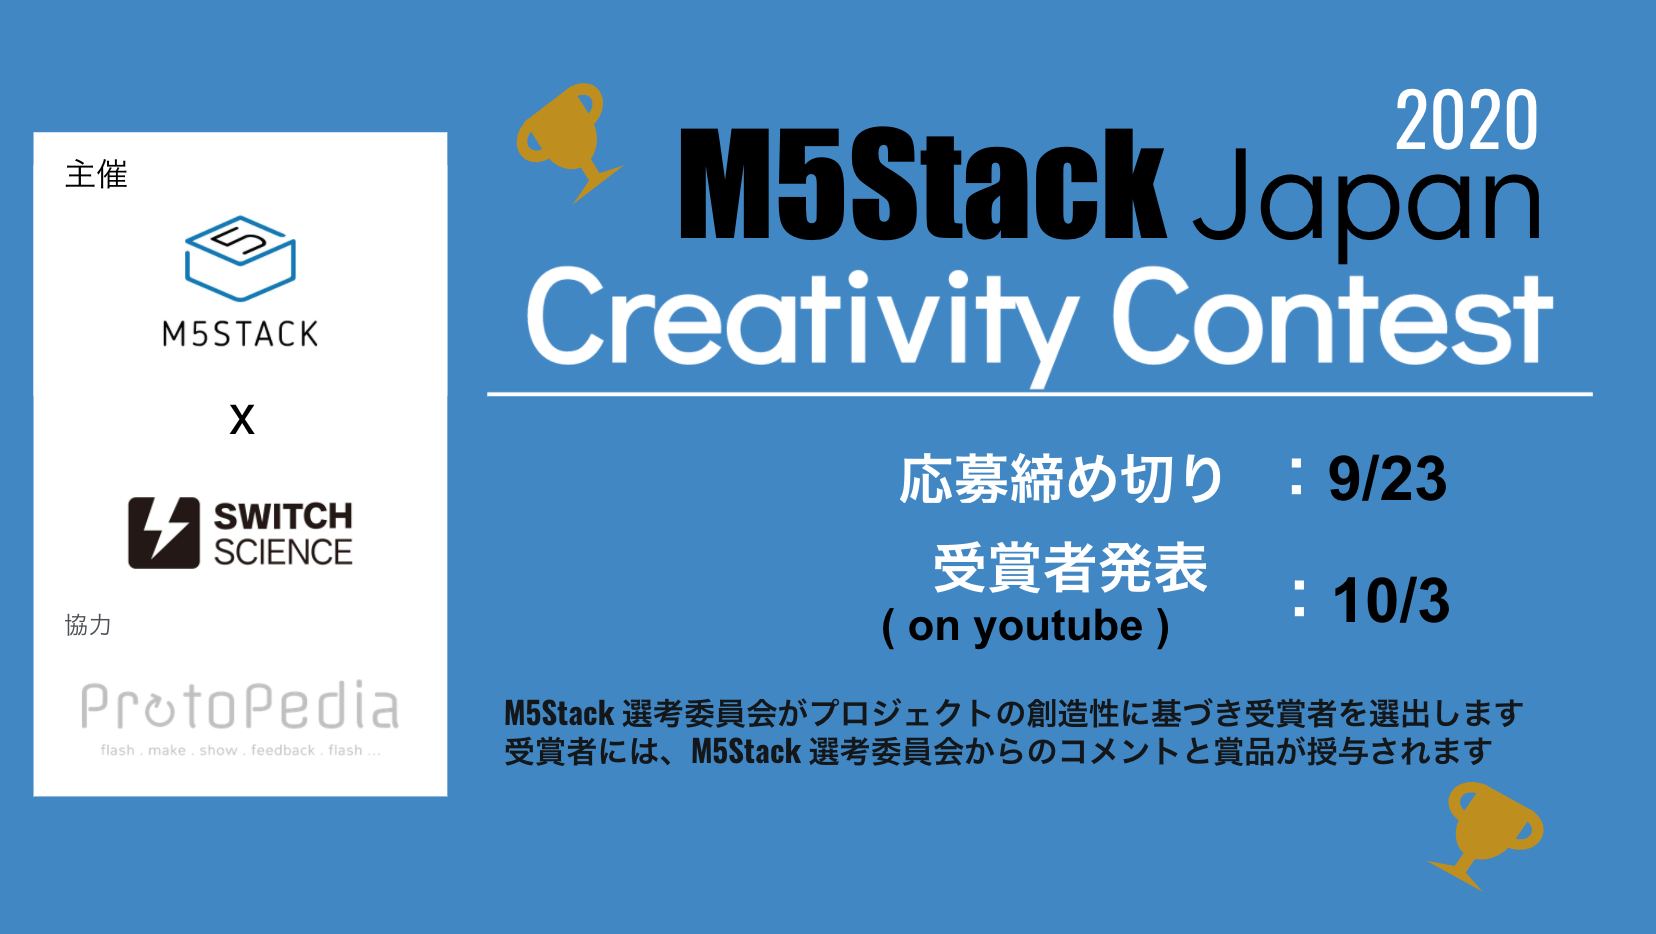 『M5Stack Japan Creativity Contest 2020』開催決定、応募は2020年9月23日まで